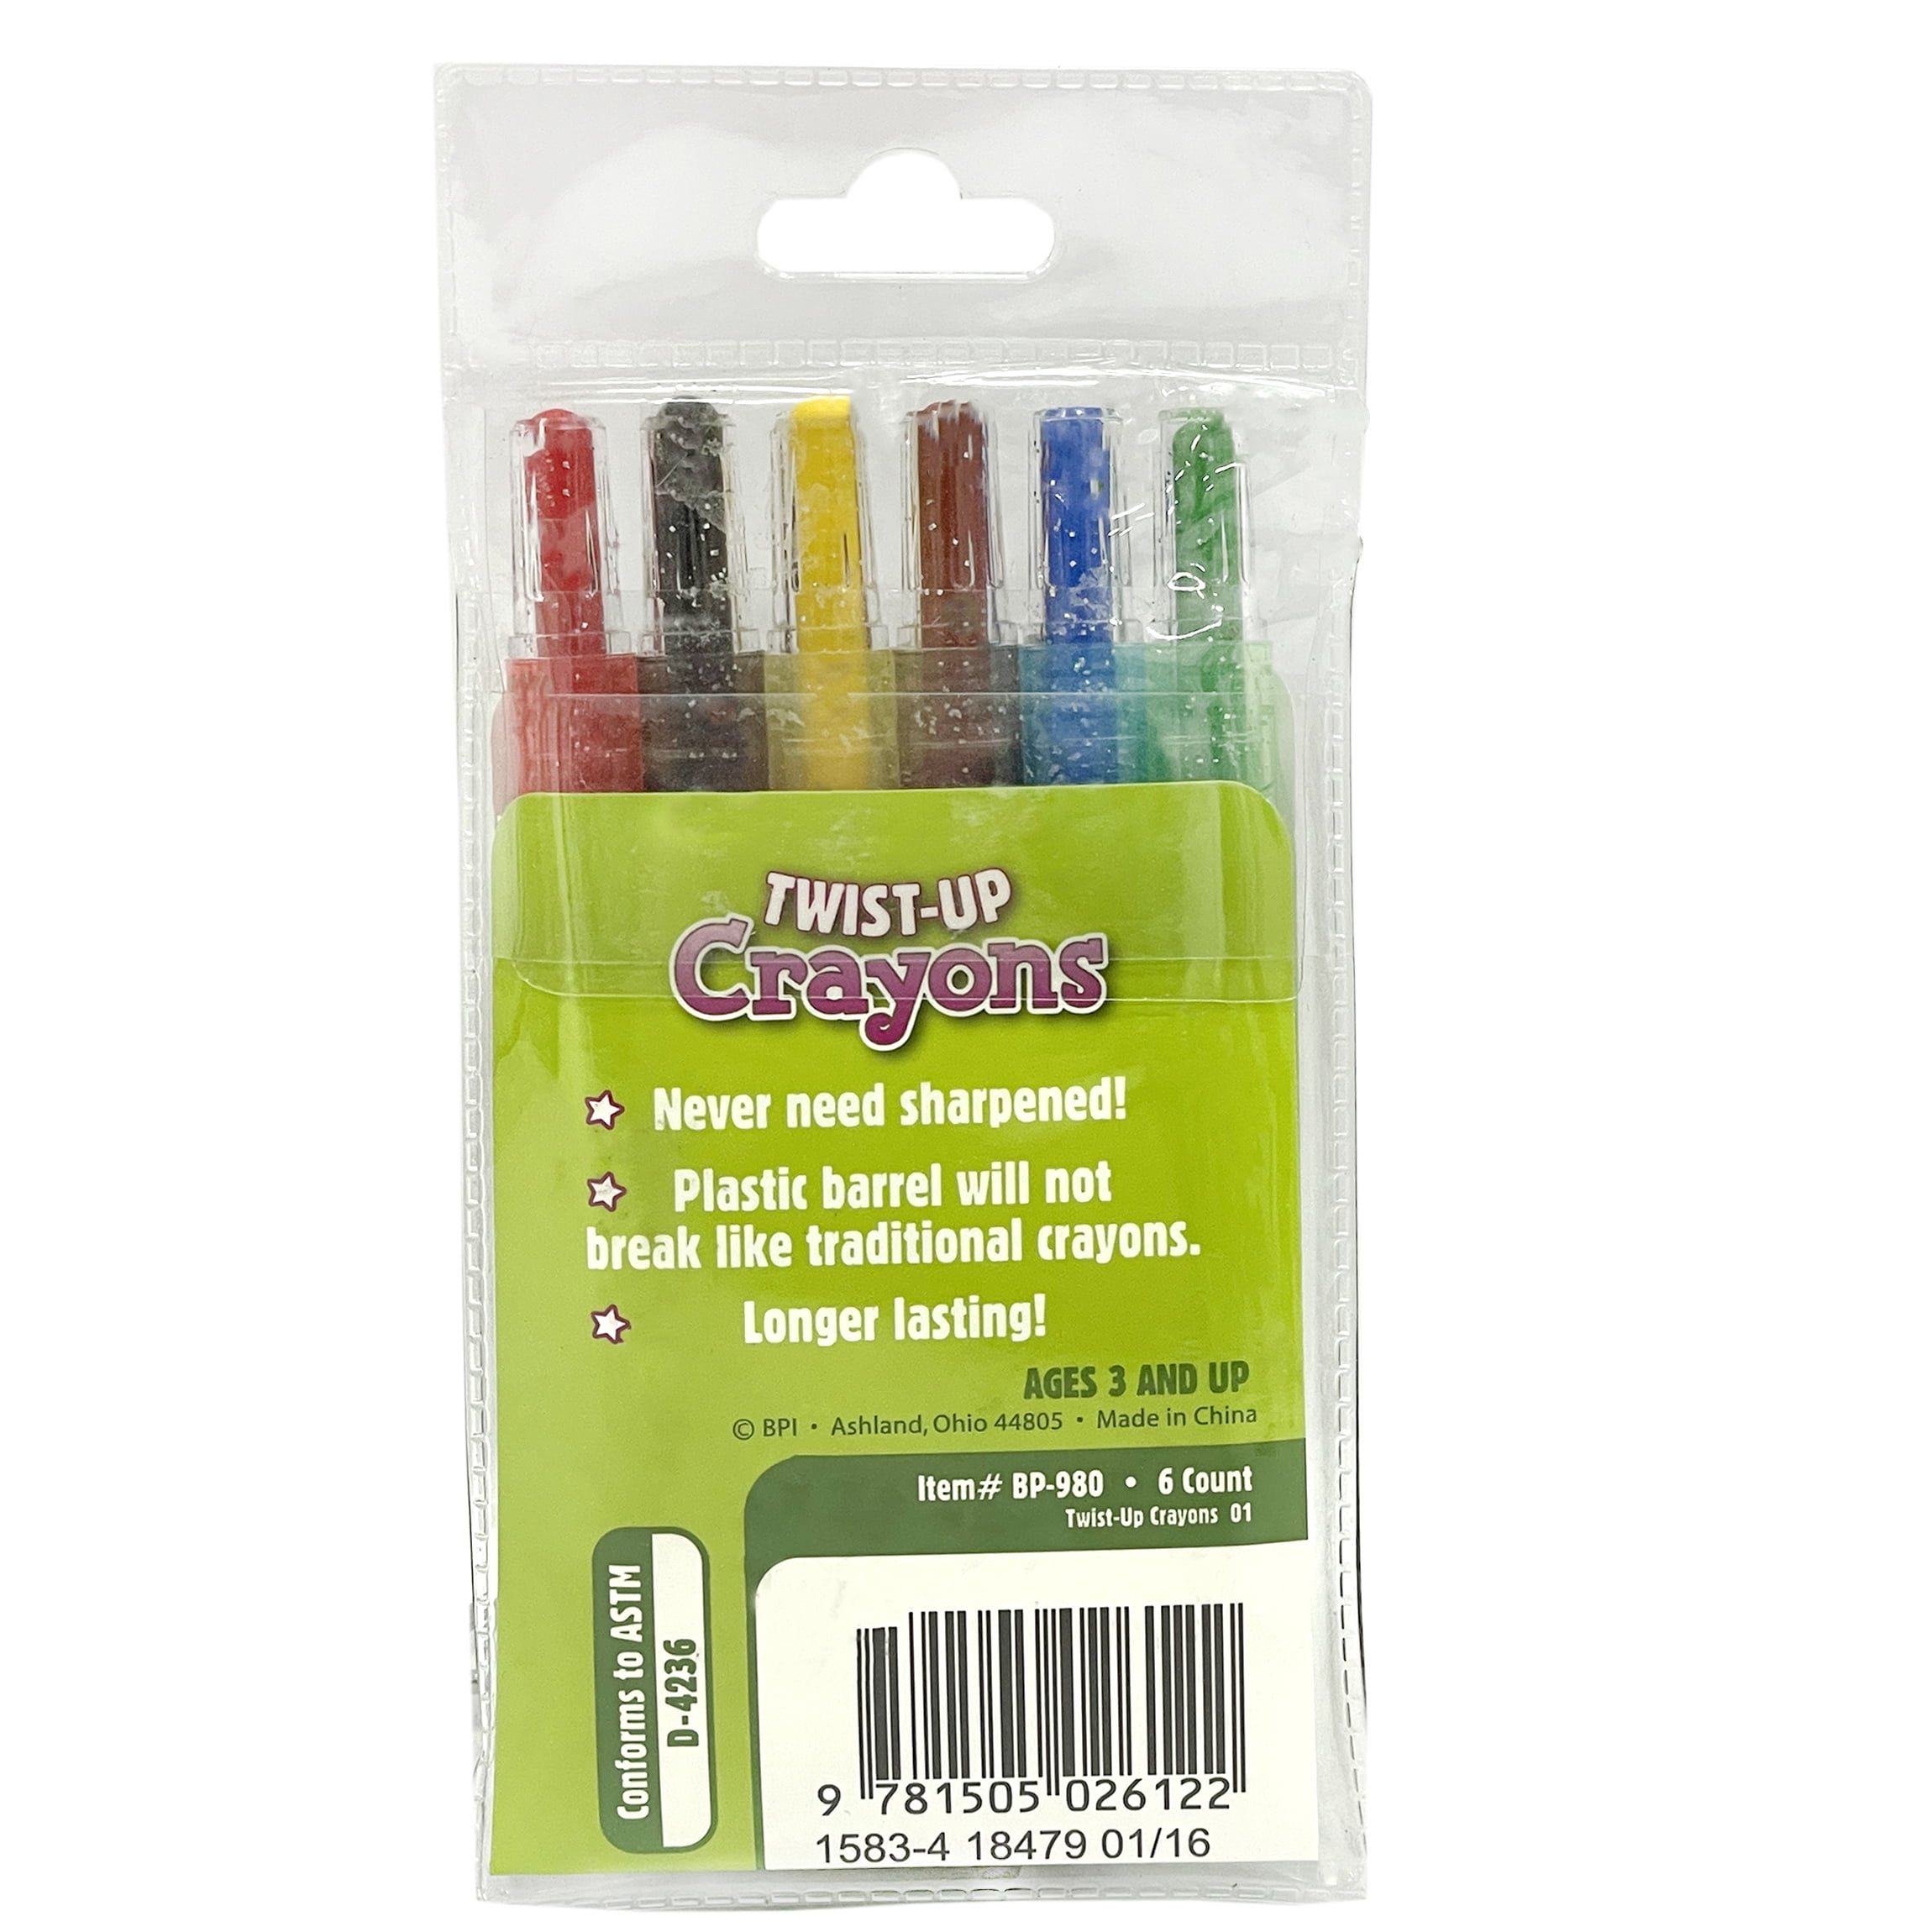 Bendon Twist-Up Crayons 6Pk 6 ct